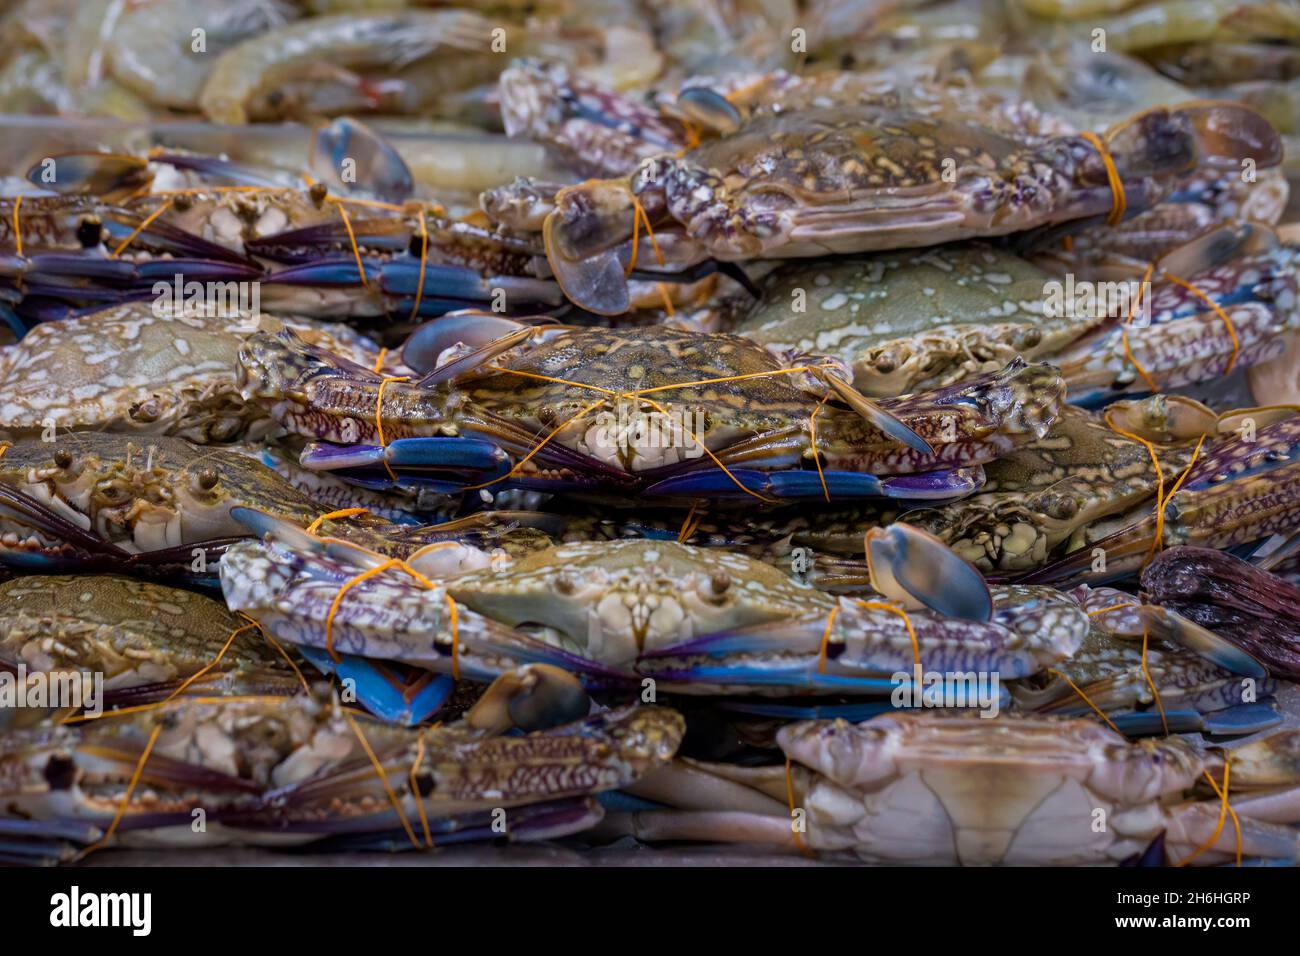 Pile of Blue Swimmer crabs, Portunus pelagicus, on display at a UK fishmongers shop Stock Photo